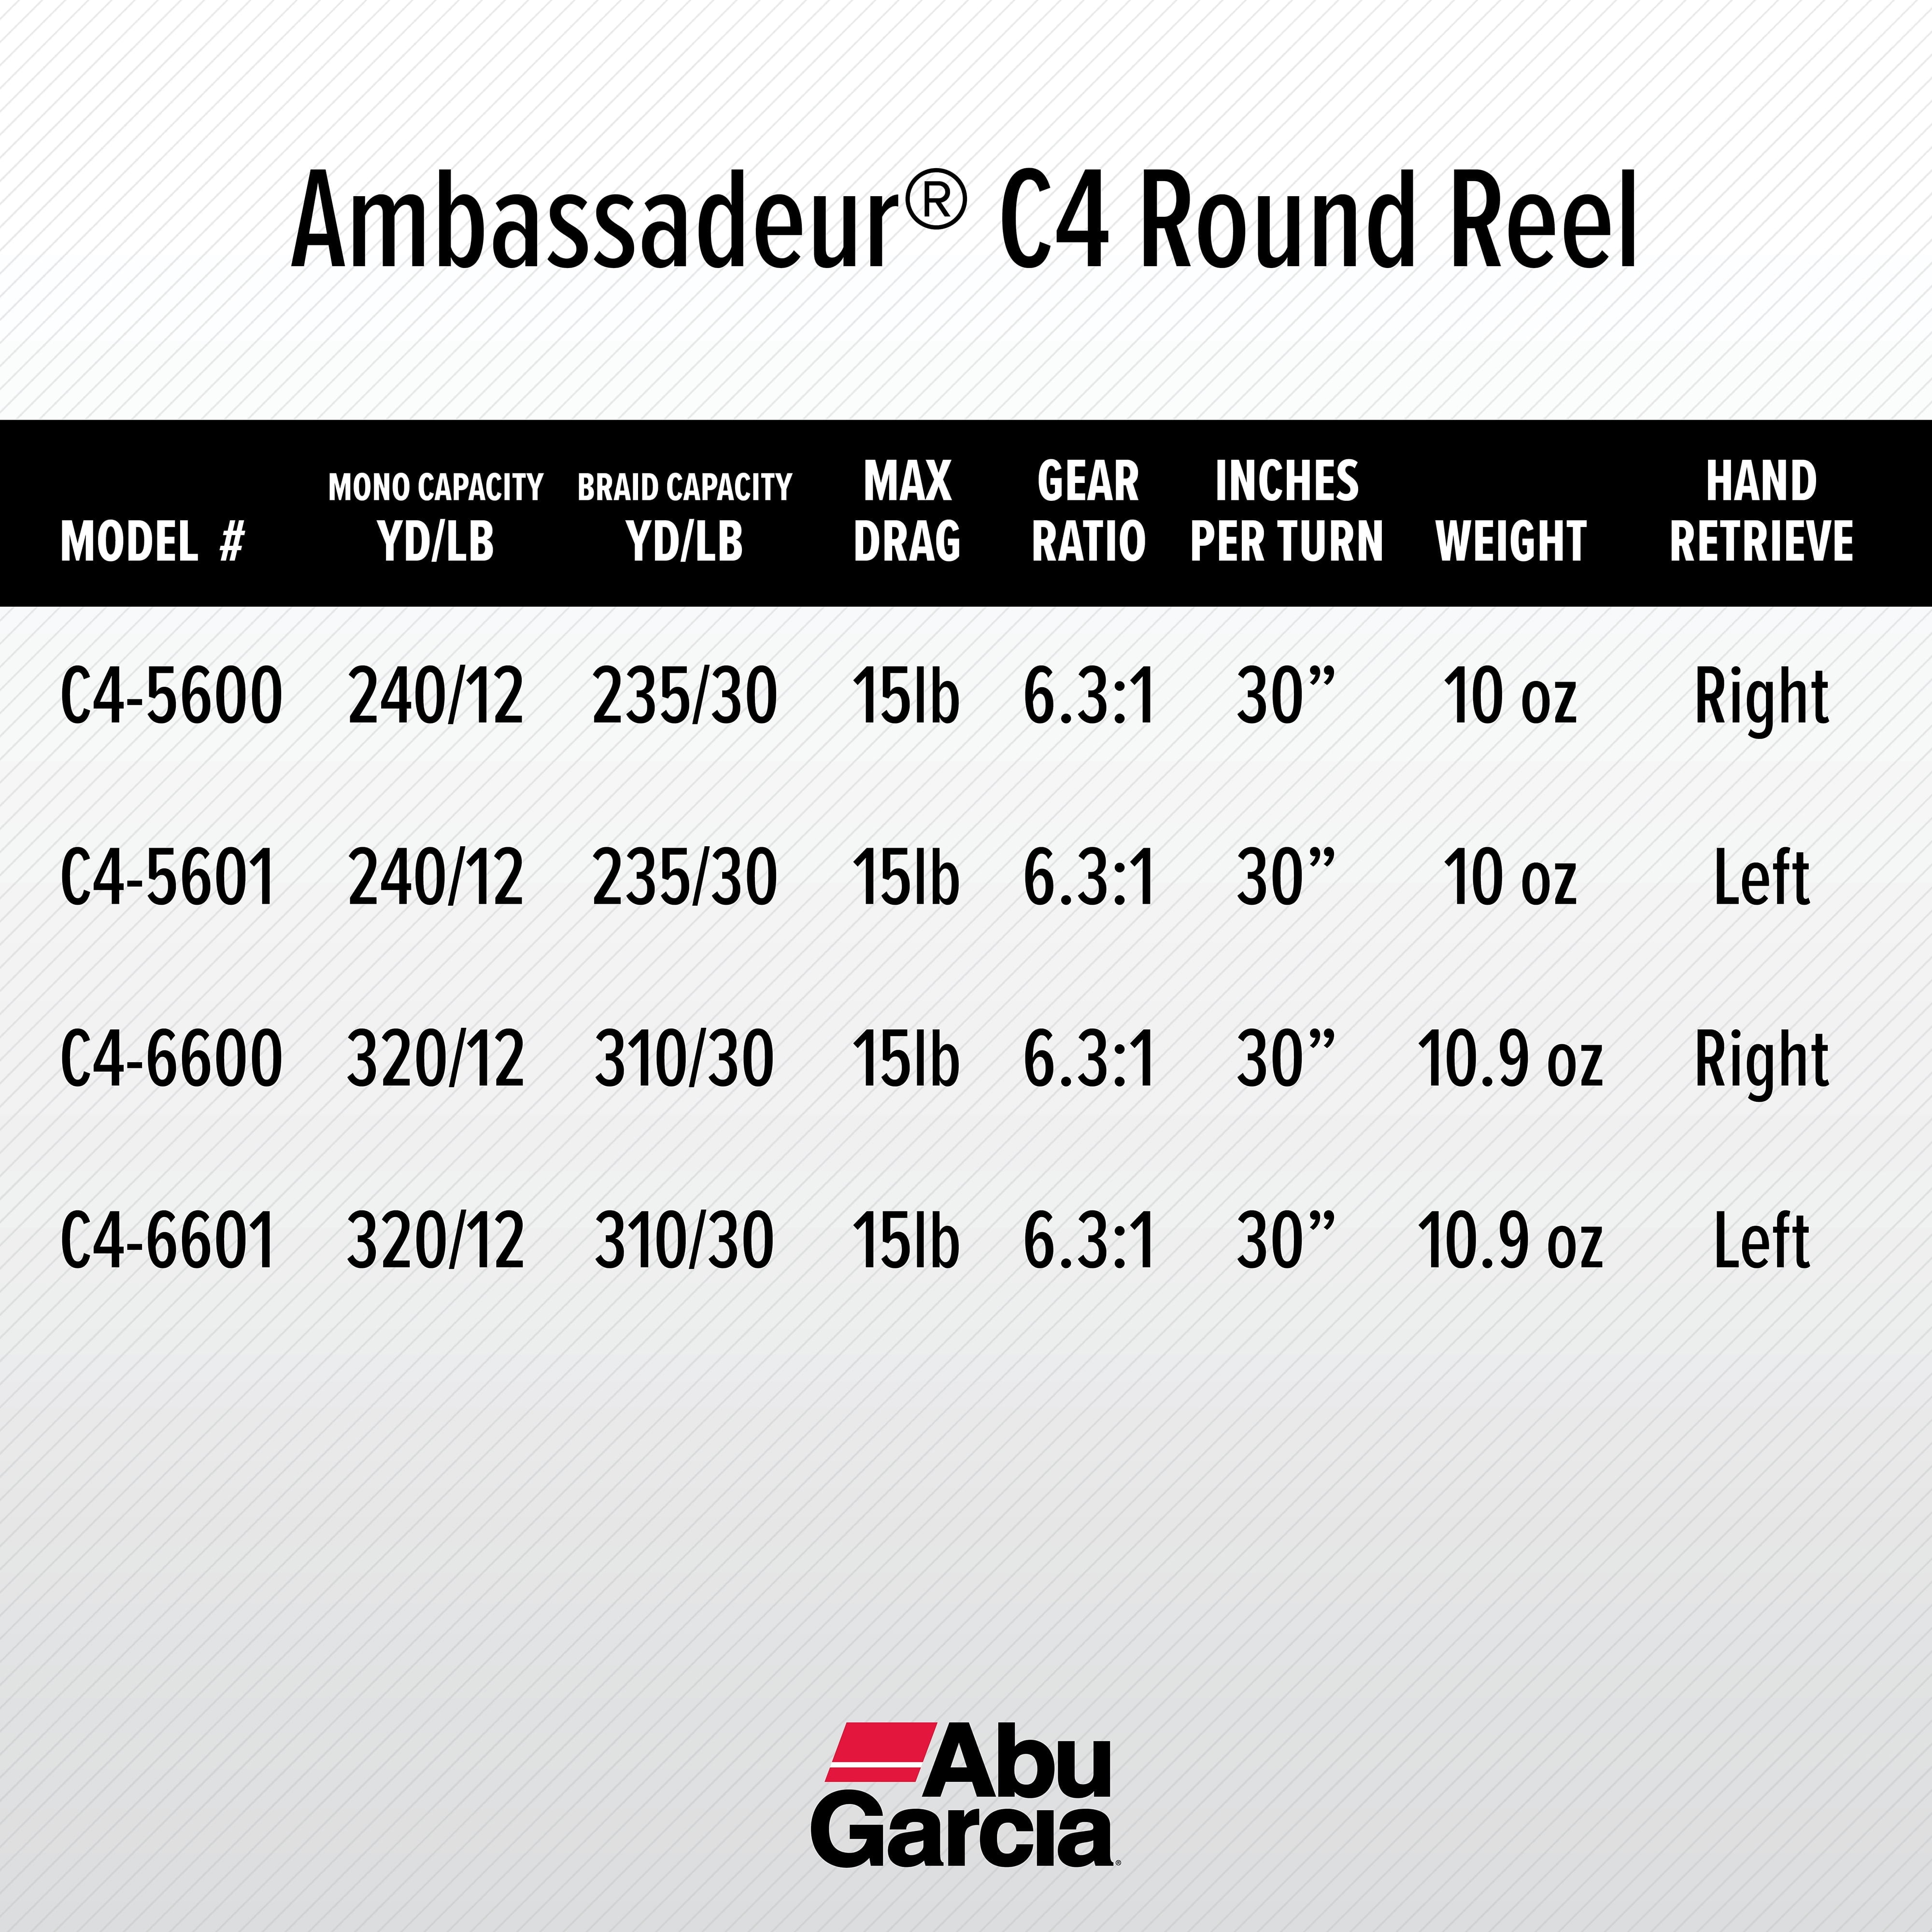 Abu Garcia Ambassadeur C4 Conventional Reel, Size 6601 (1292717) 